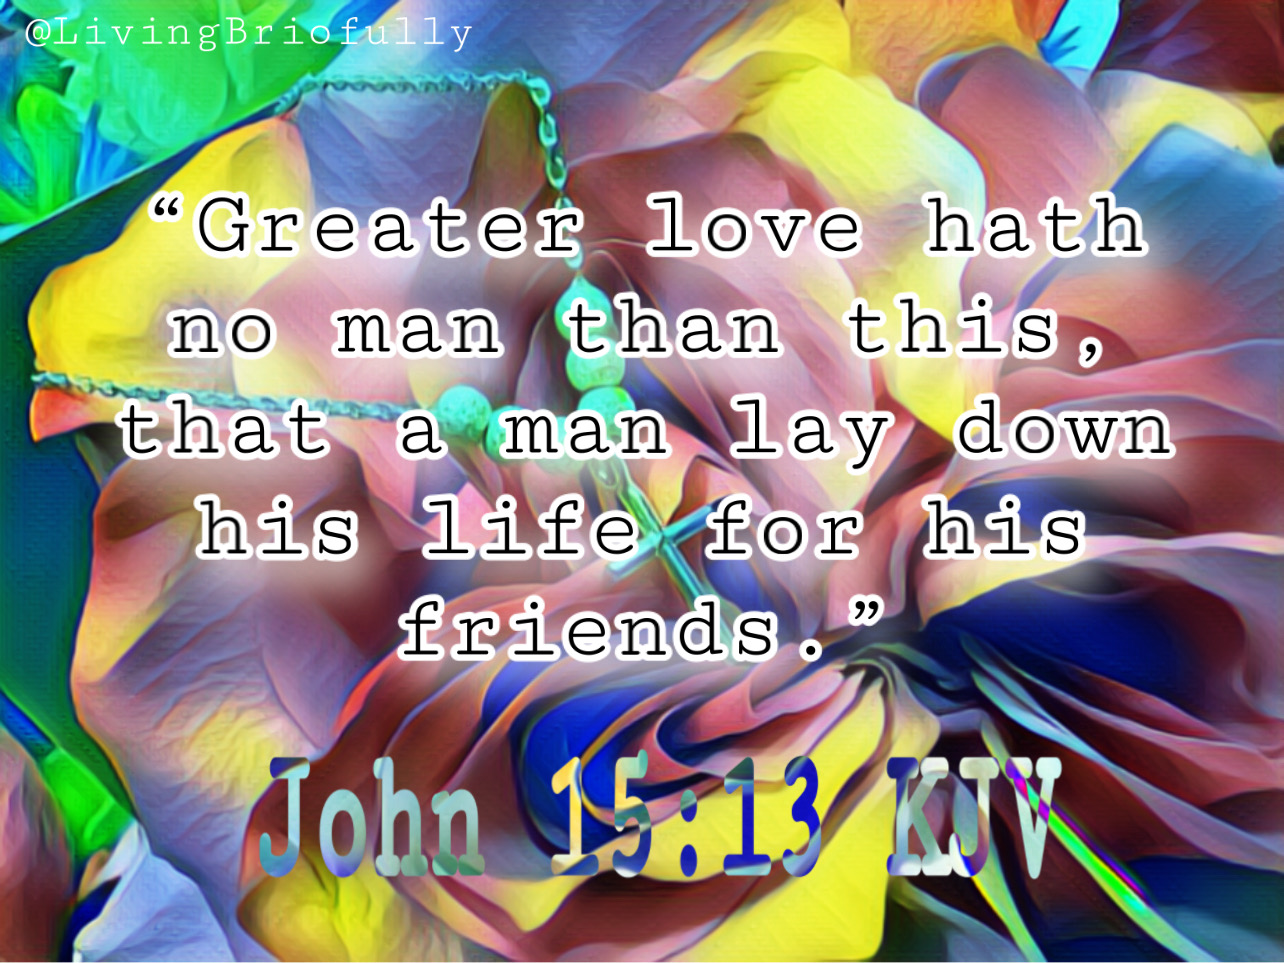 "Greater love hath no man than this, that a man lay down his life for his friends." John 15:13 KJV